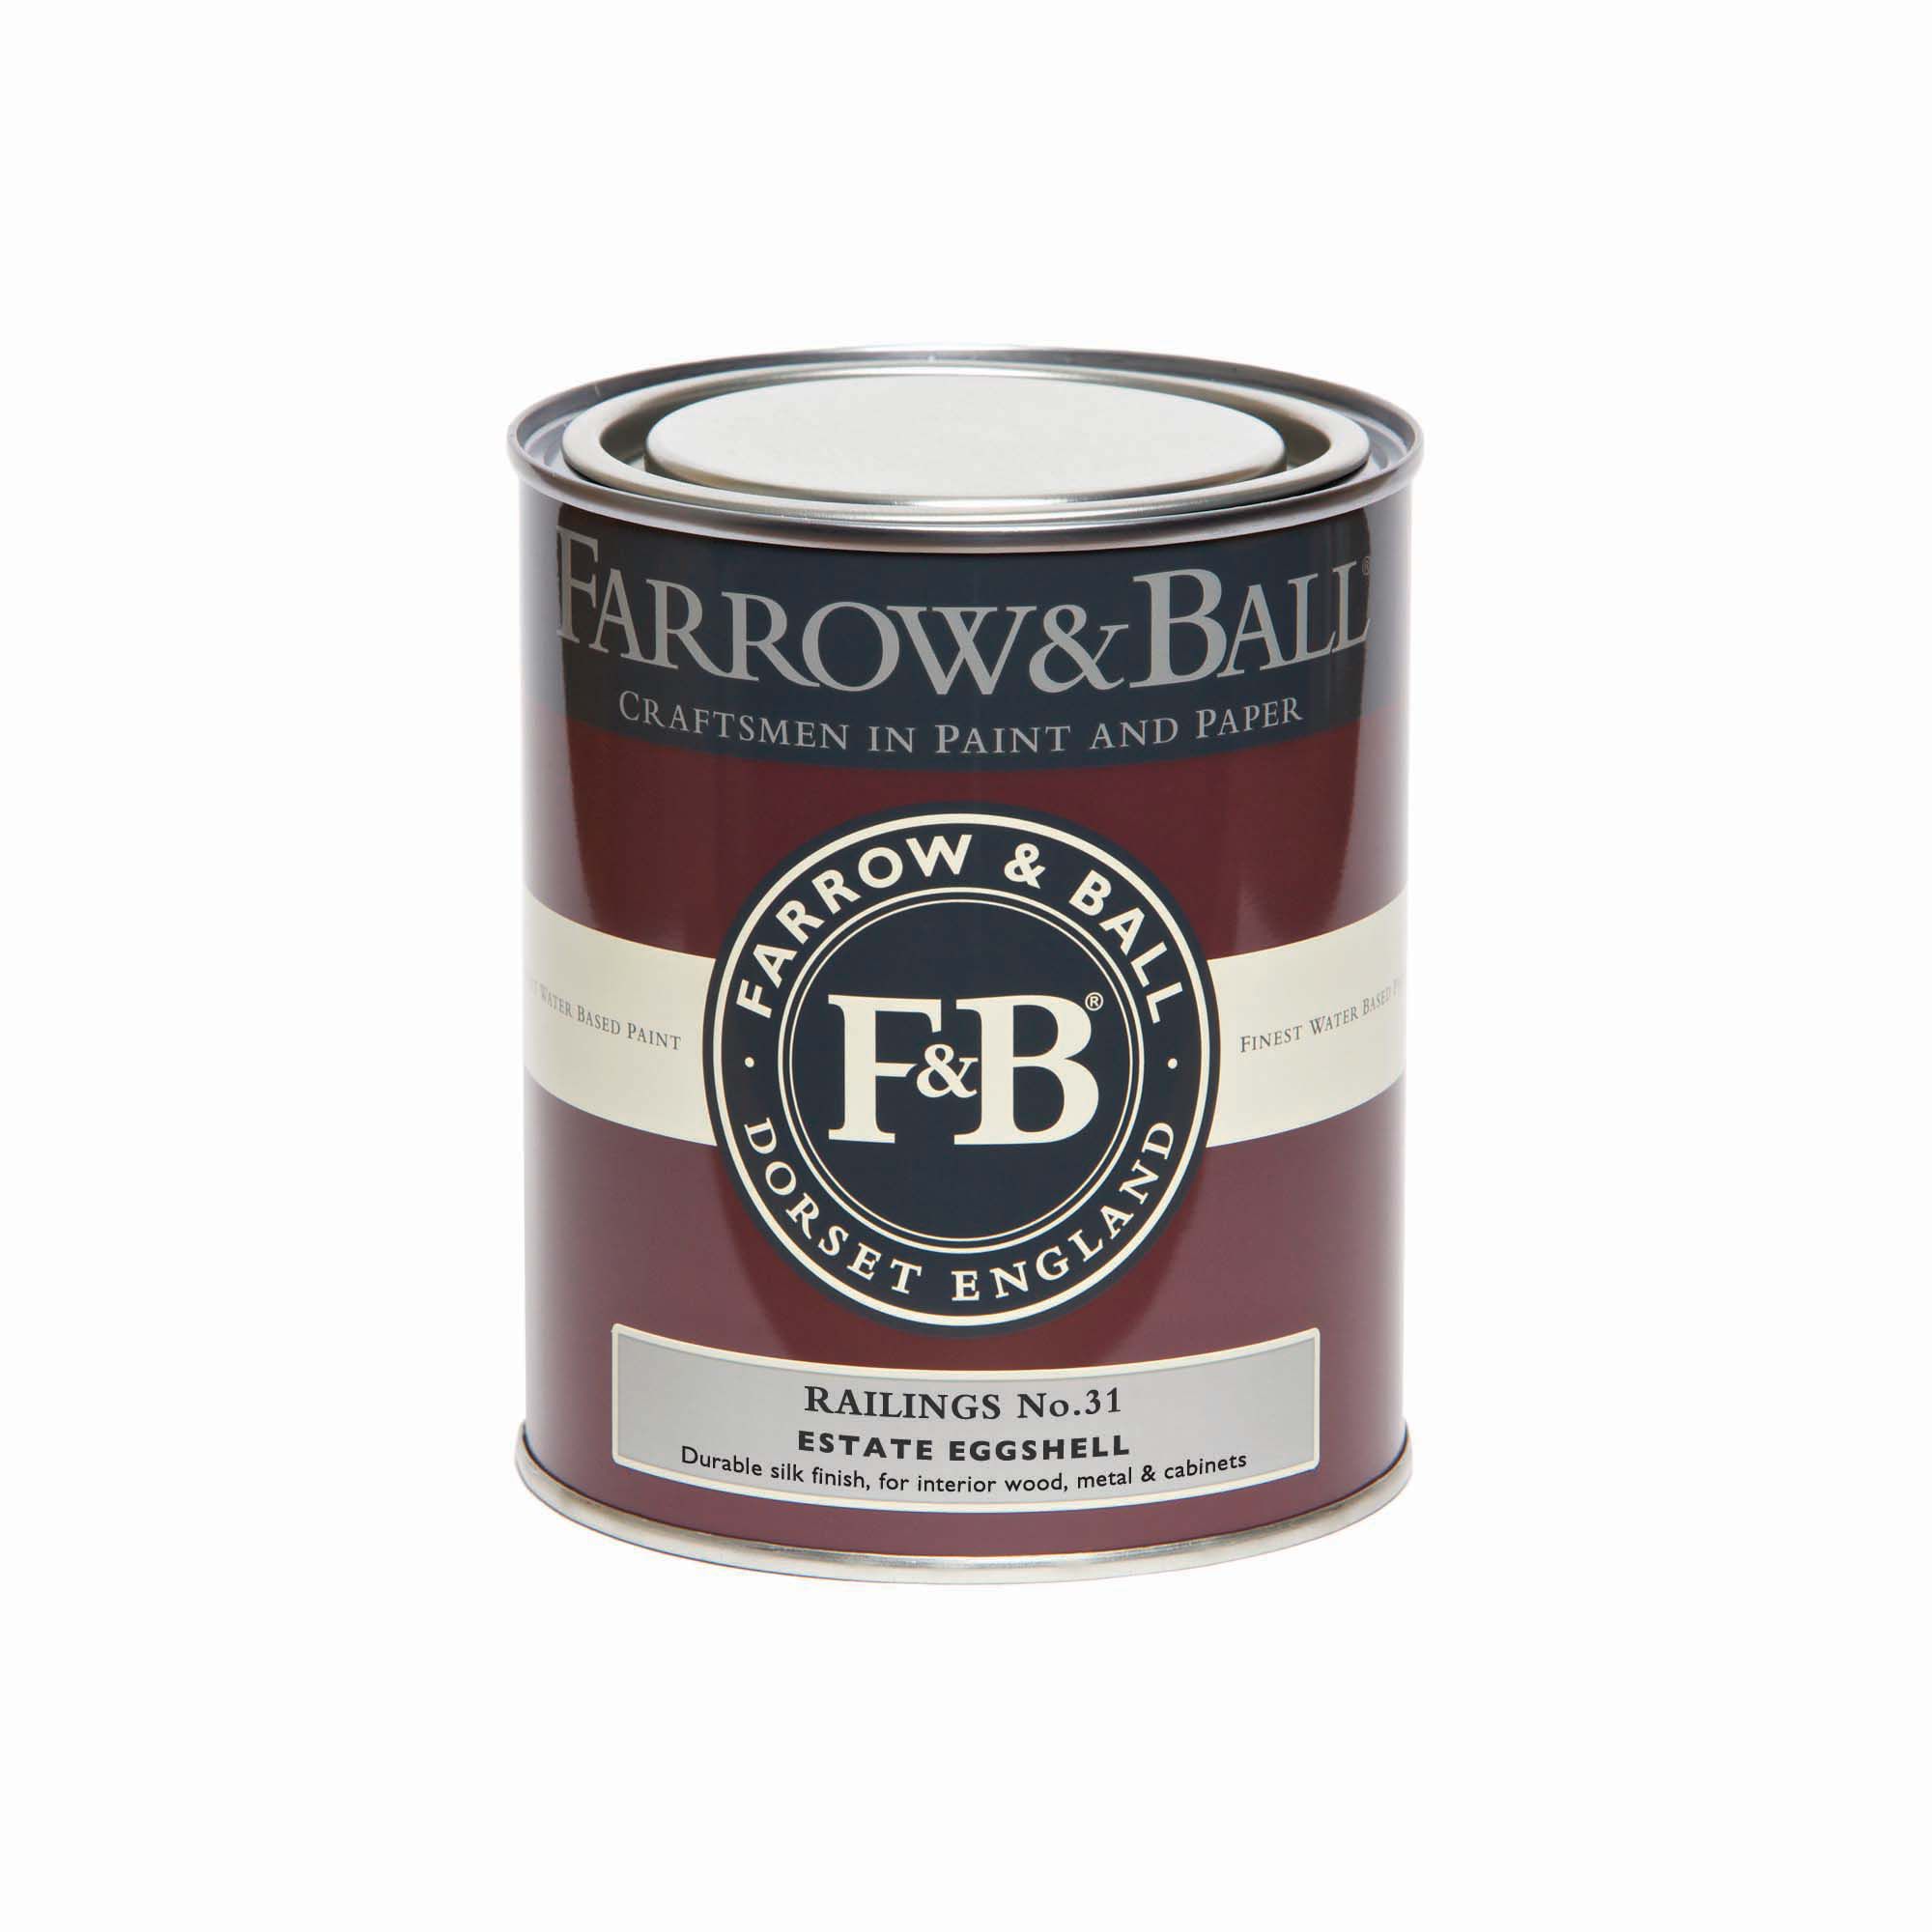 Farrow & Ball Estate Railings No.31 Eggshell Paint, 750ml